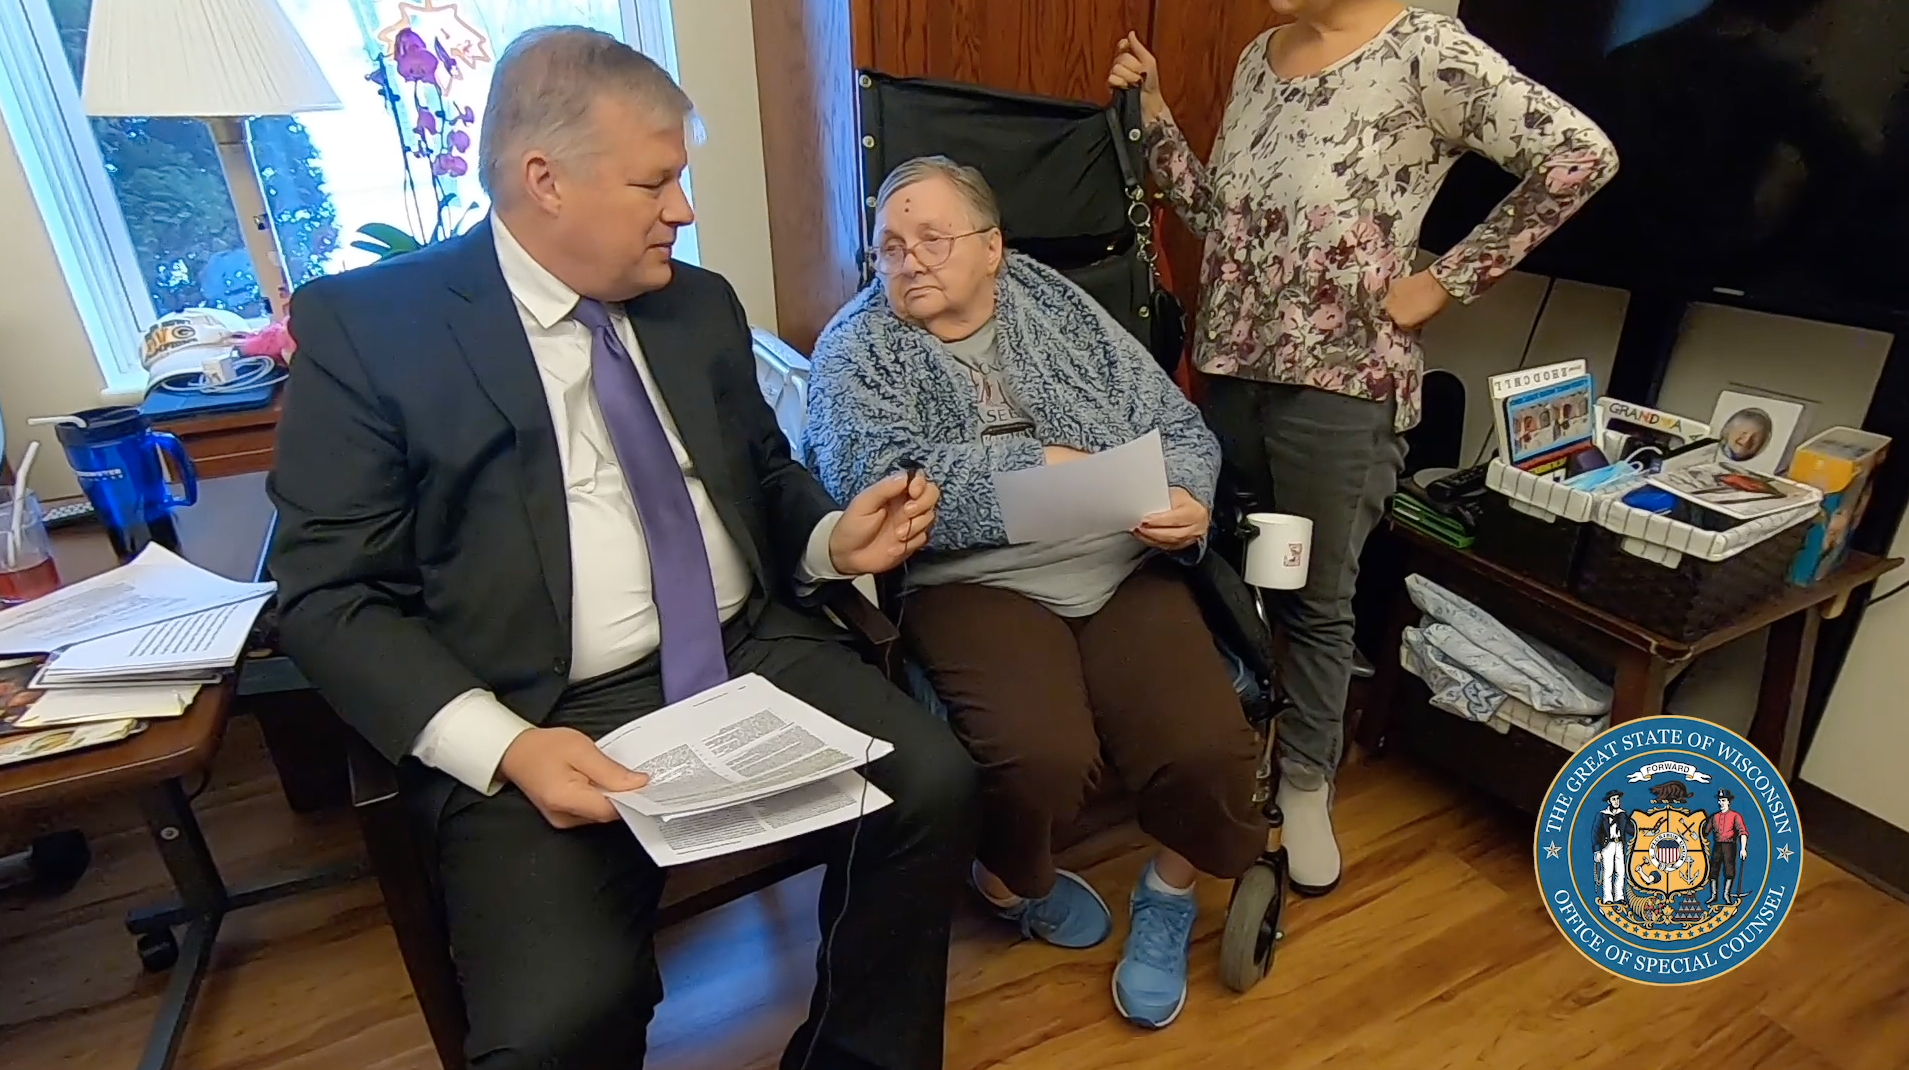 Thomas More Society lawyer Erick Kaardal interviews nursing home resident Sandra Klitzke